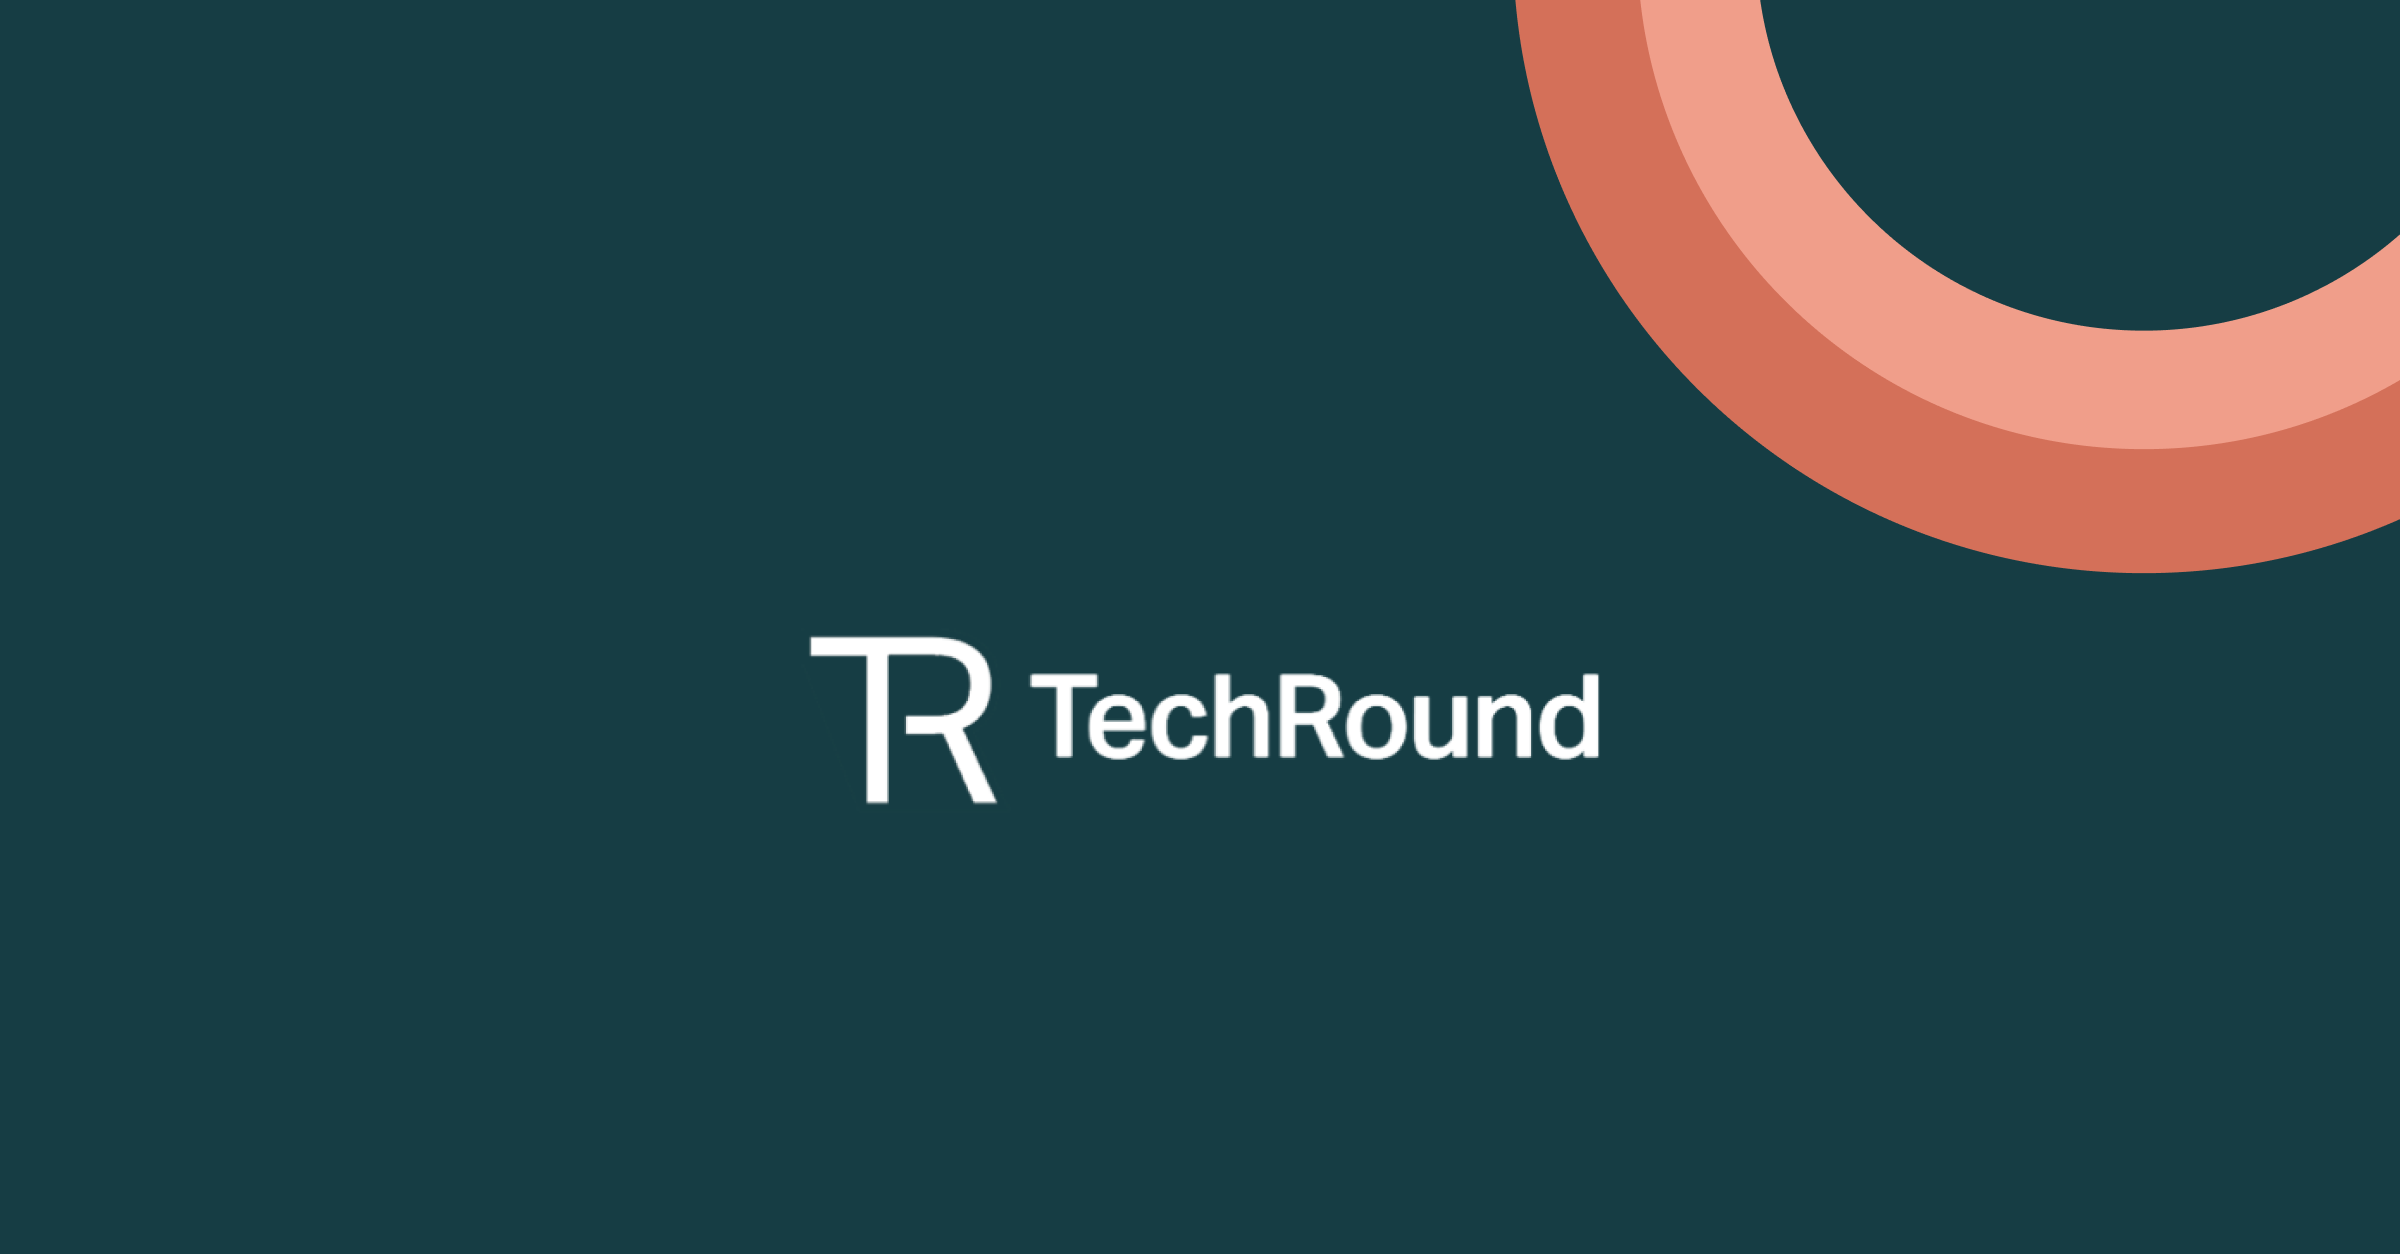 TechRound logo on a dark green background with a peach graphic